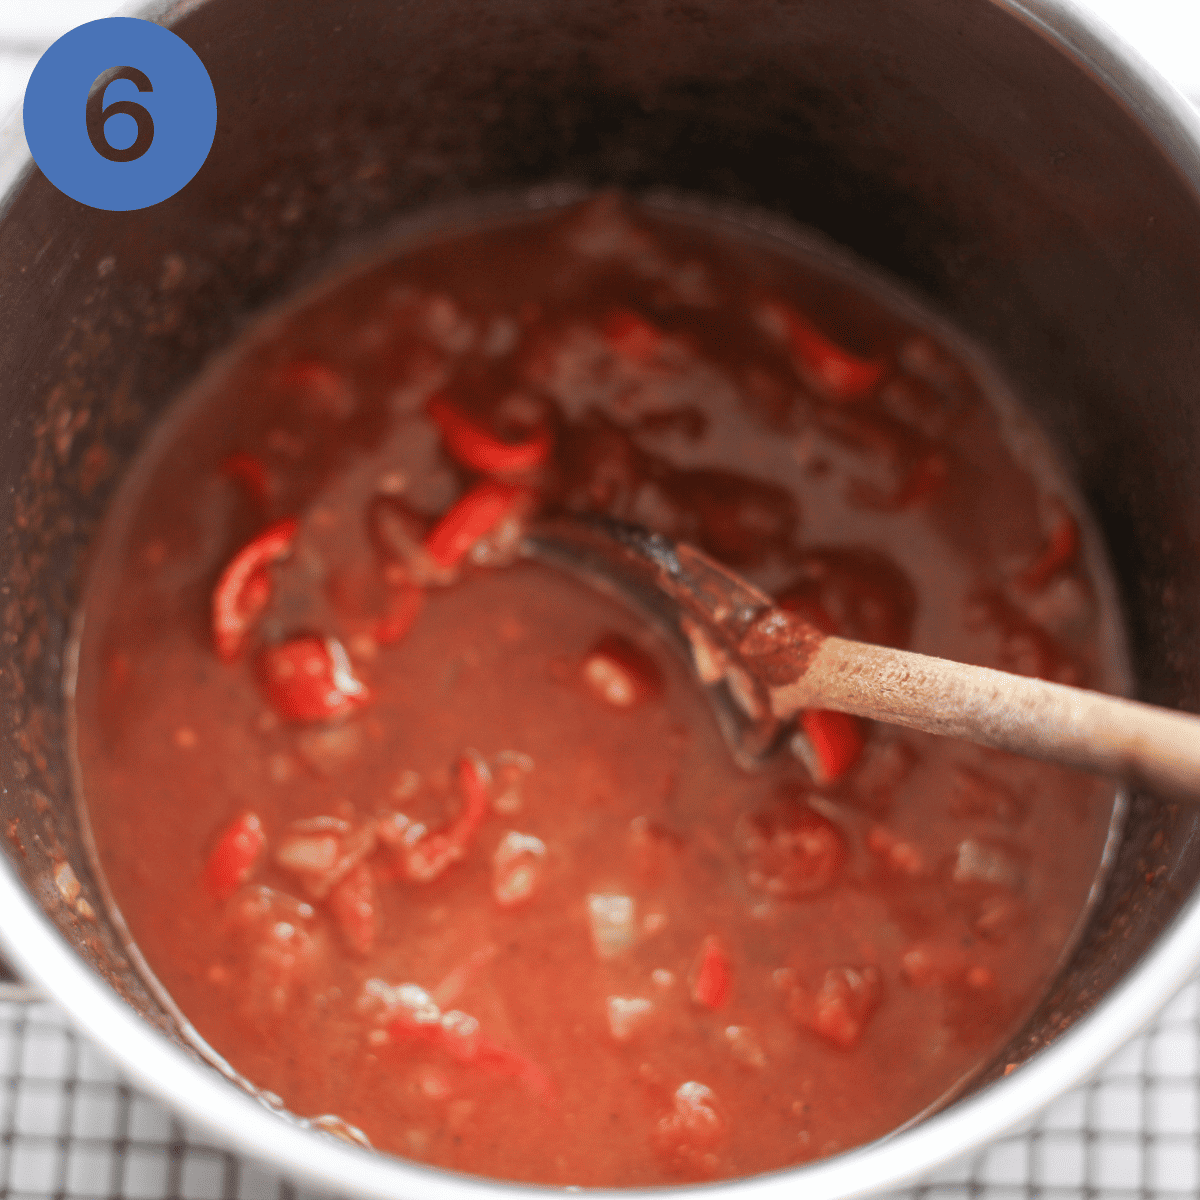 Adding tinned tomatoes to sauteed veg.